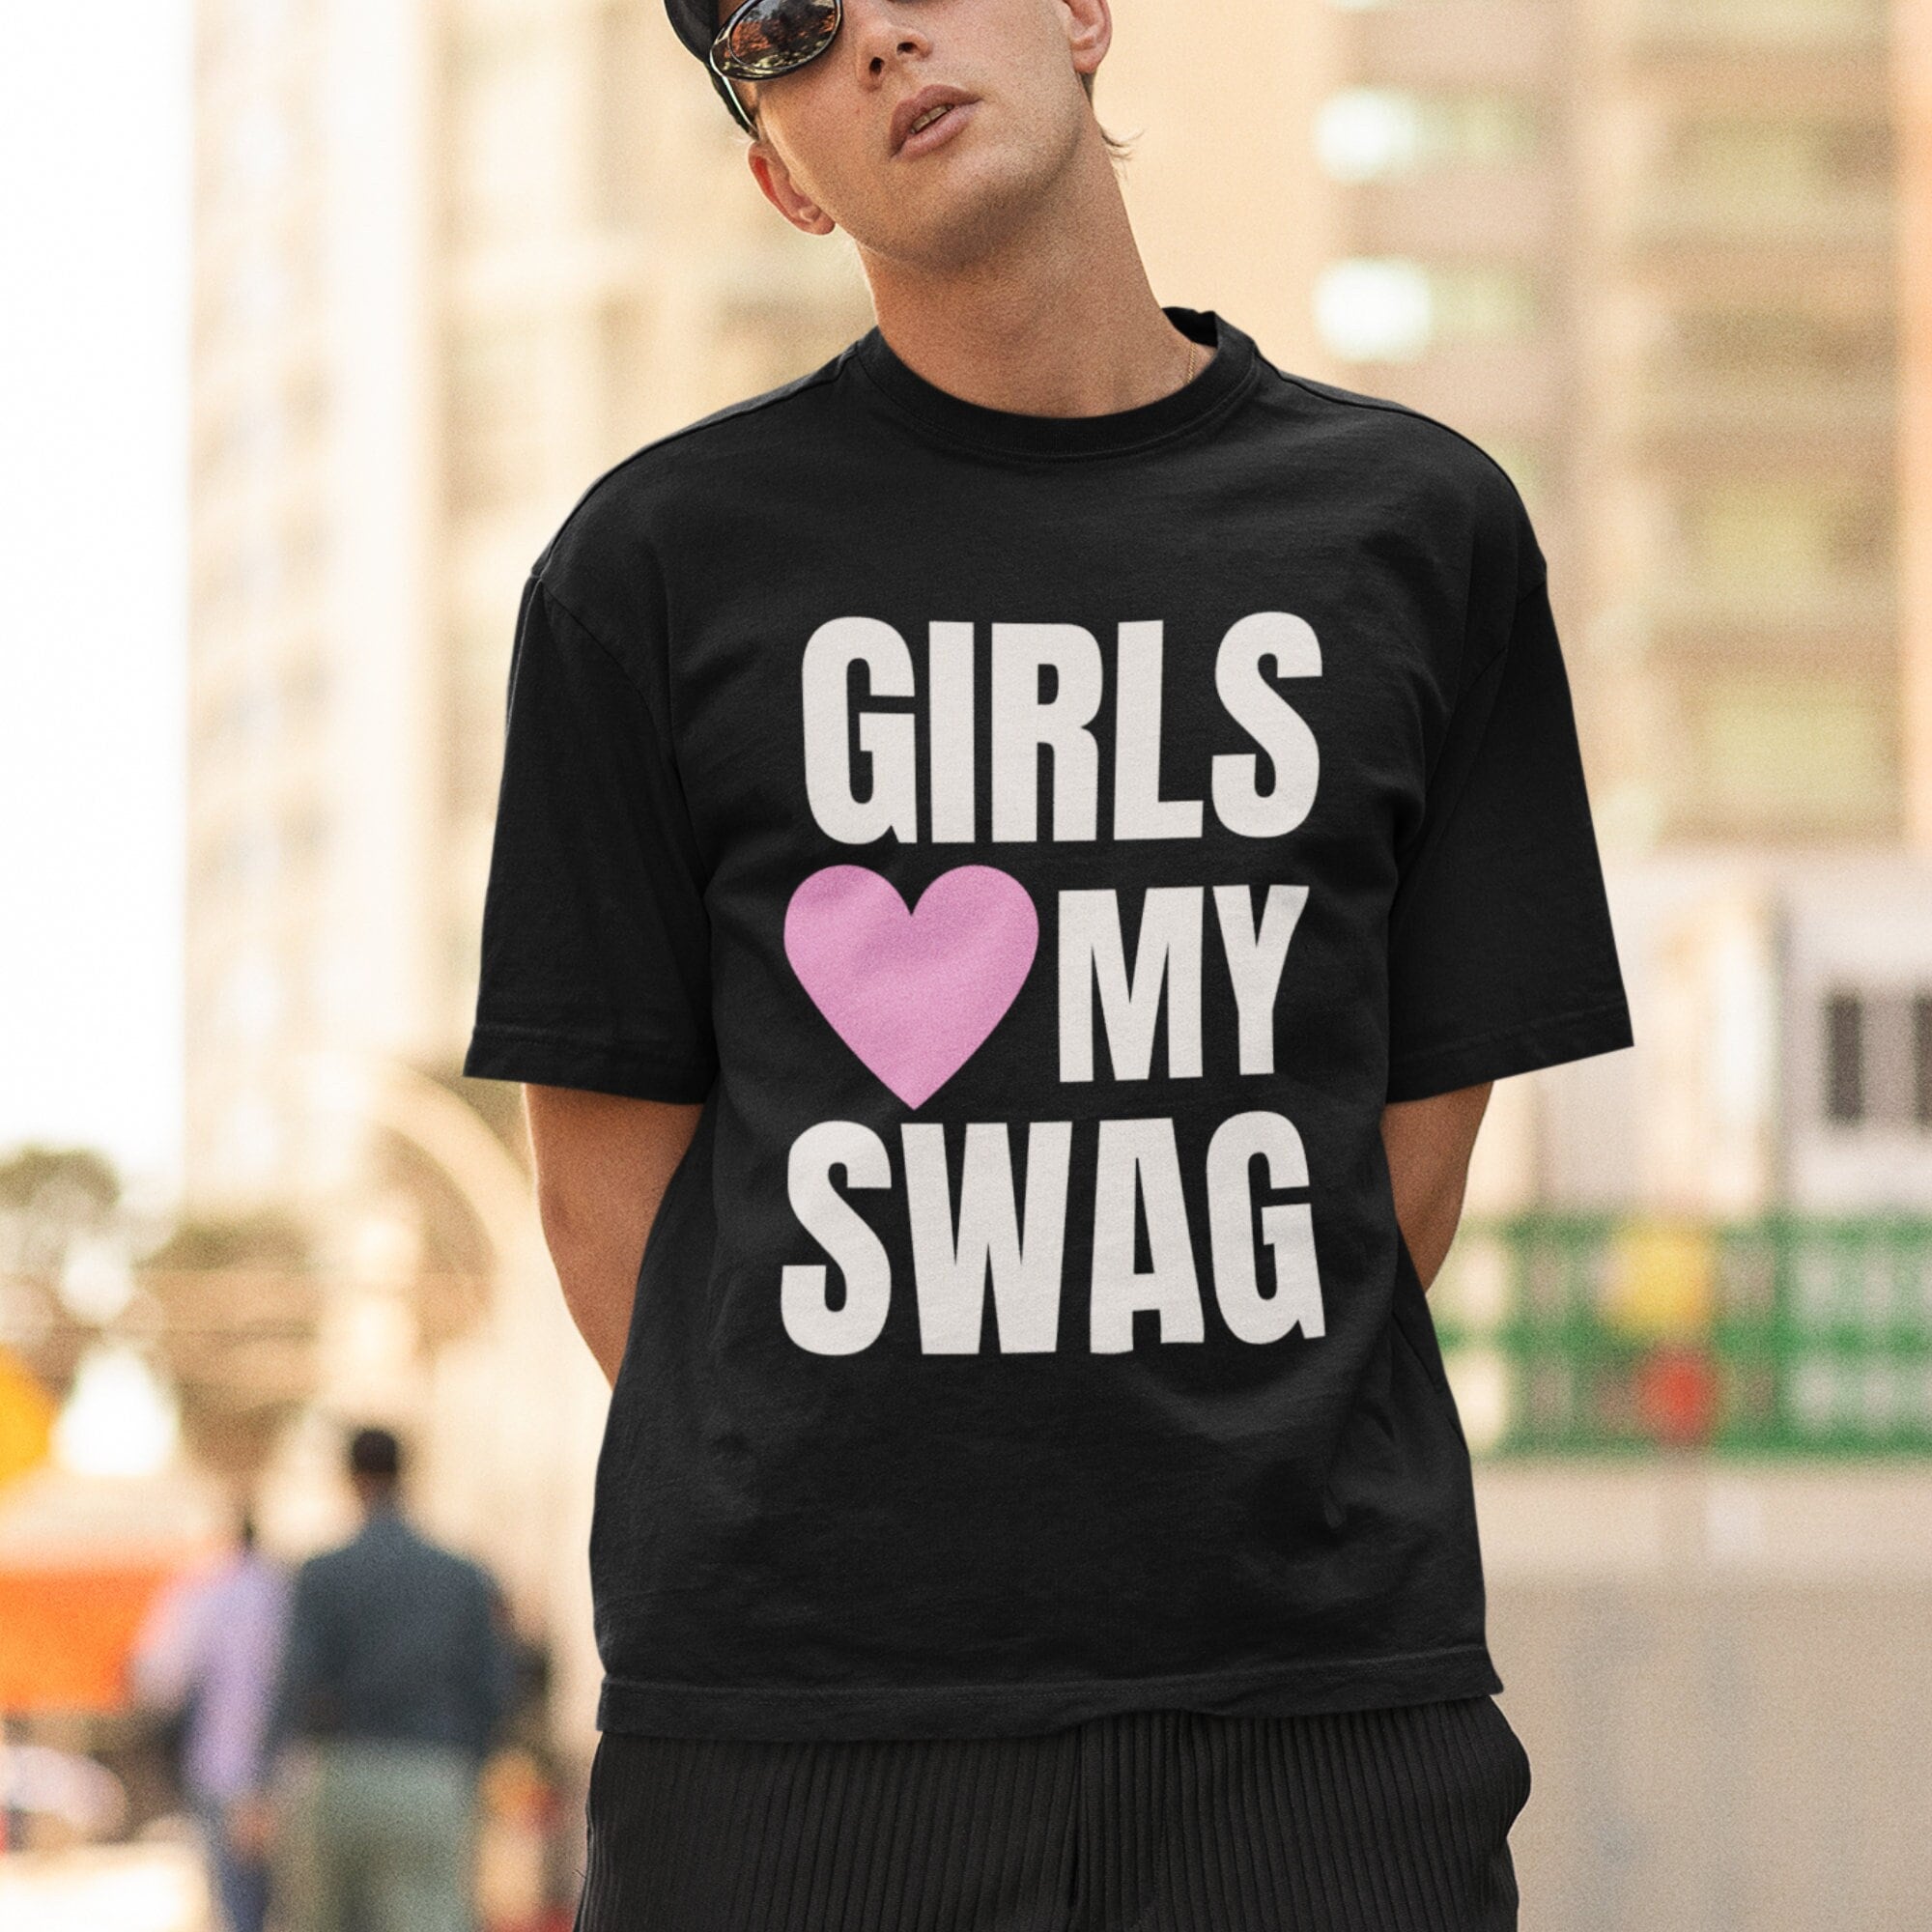 Create comics meme roblox t shirts for girls pink, t shirt roblox for girls,  roblox shirt for girls - Comics 